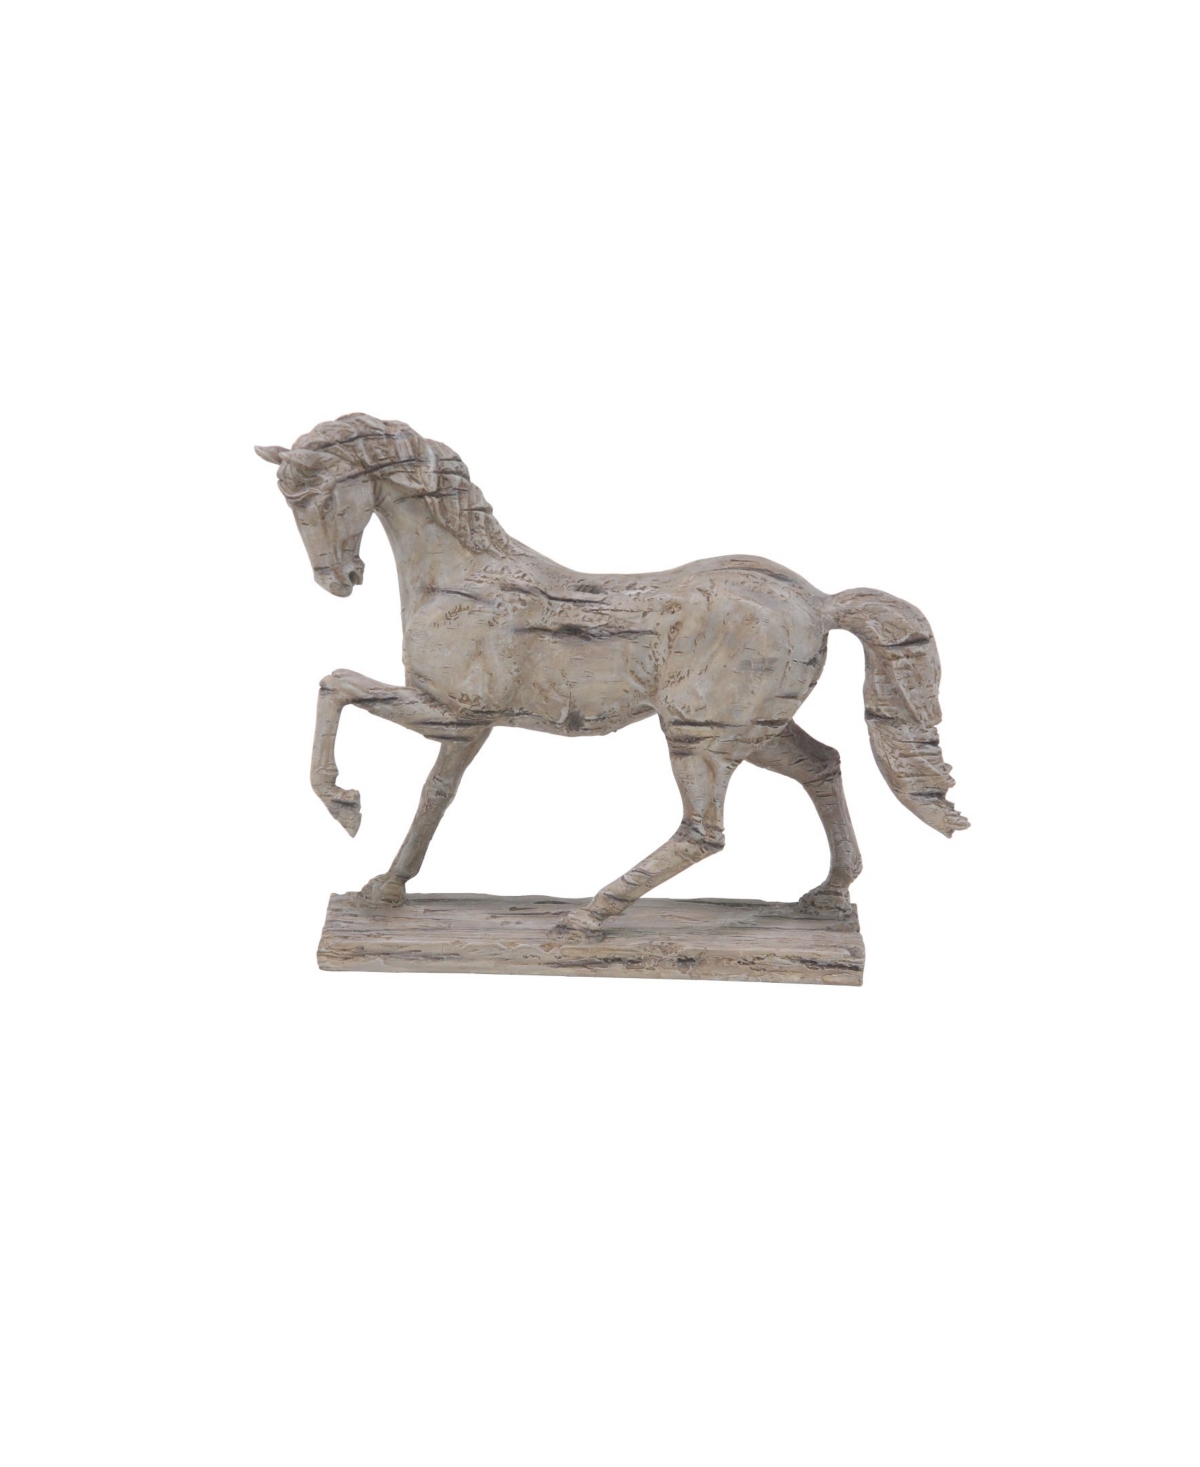 Rosemary Lane Vintage-like Horse Sculpture, 18" X 21" In Beige